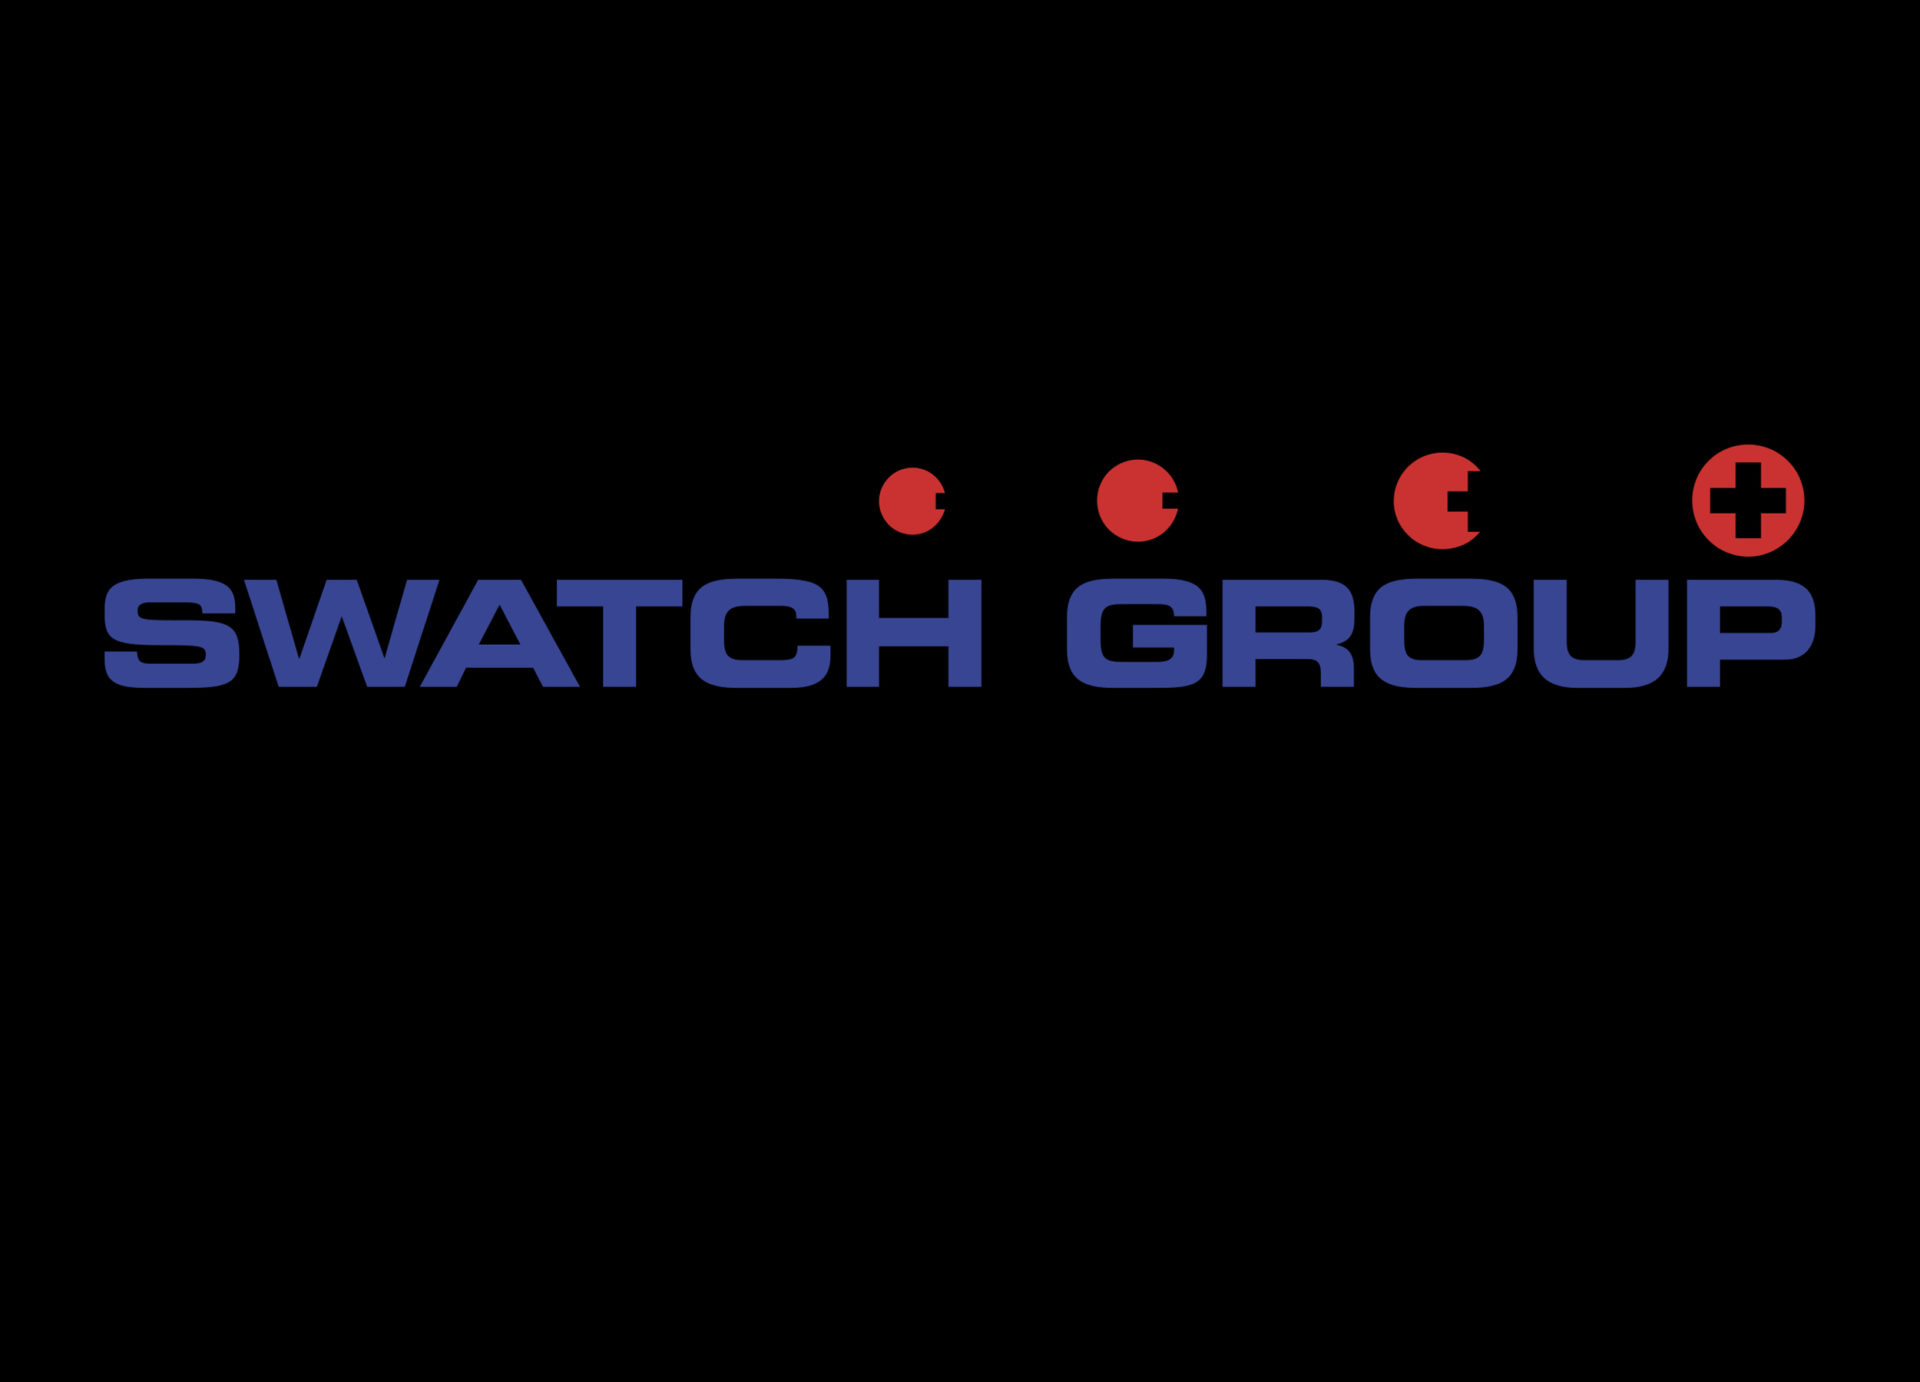 Swatch group logo